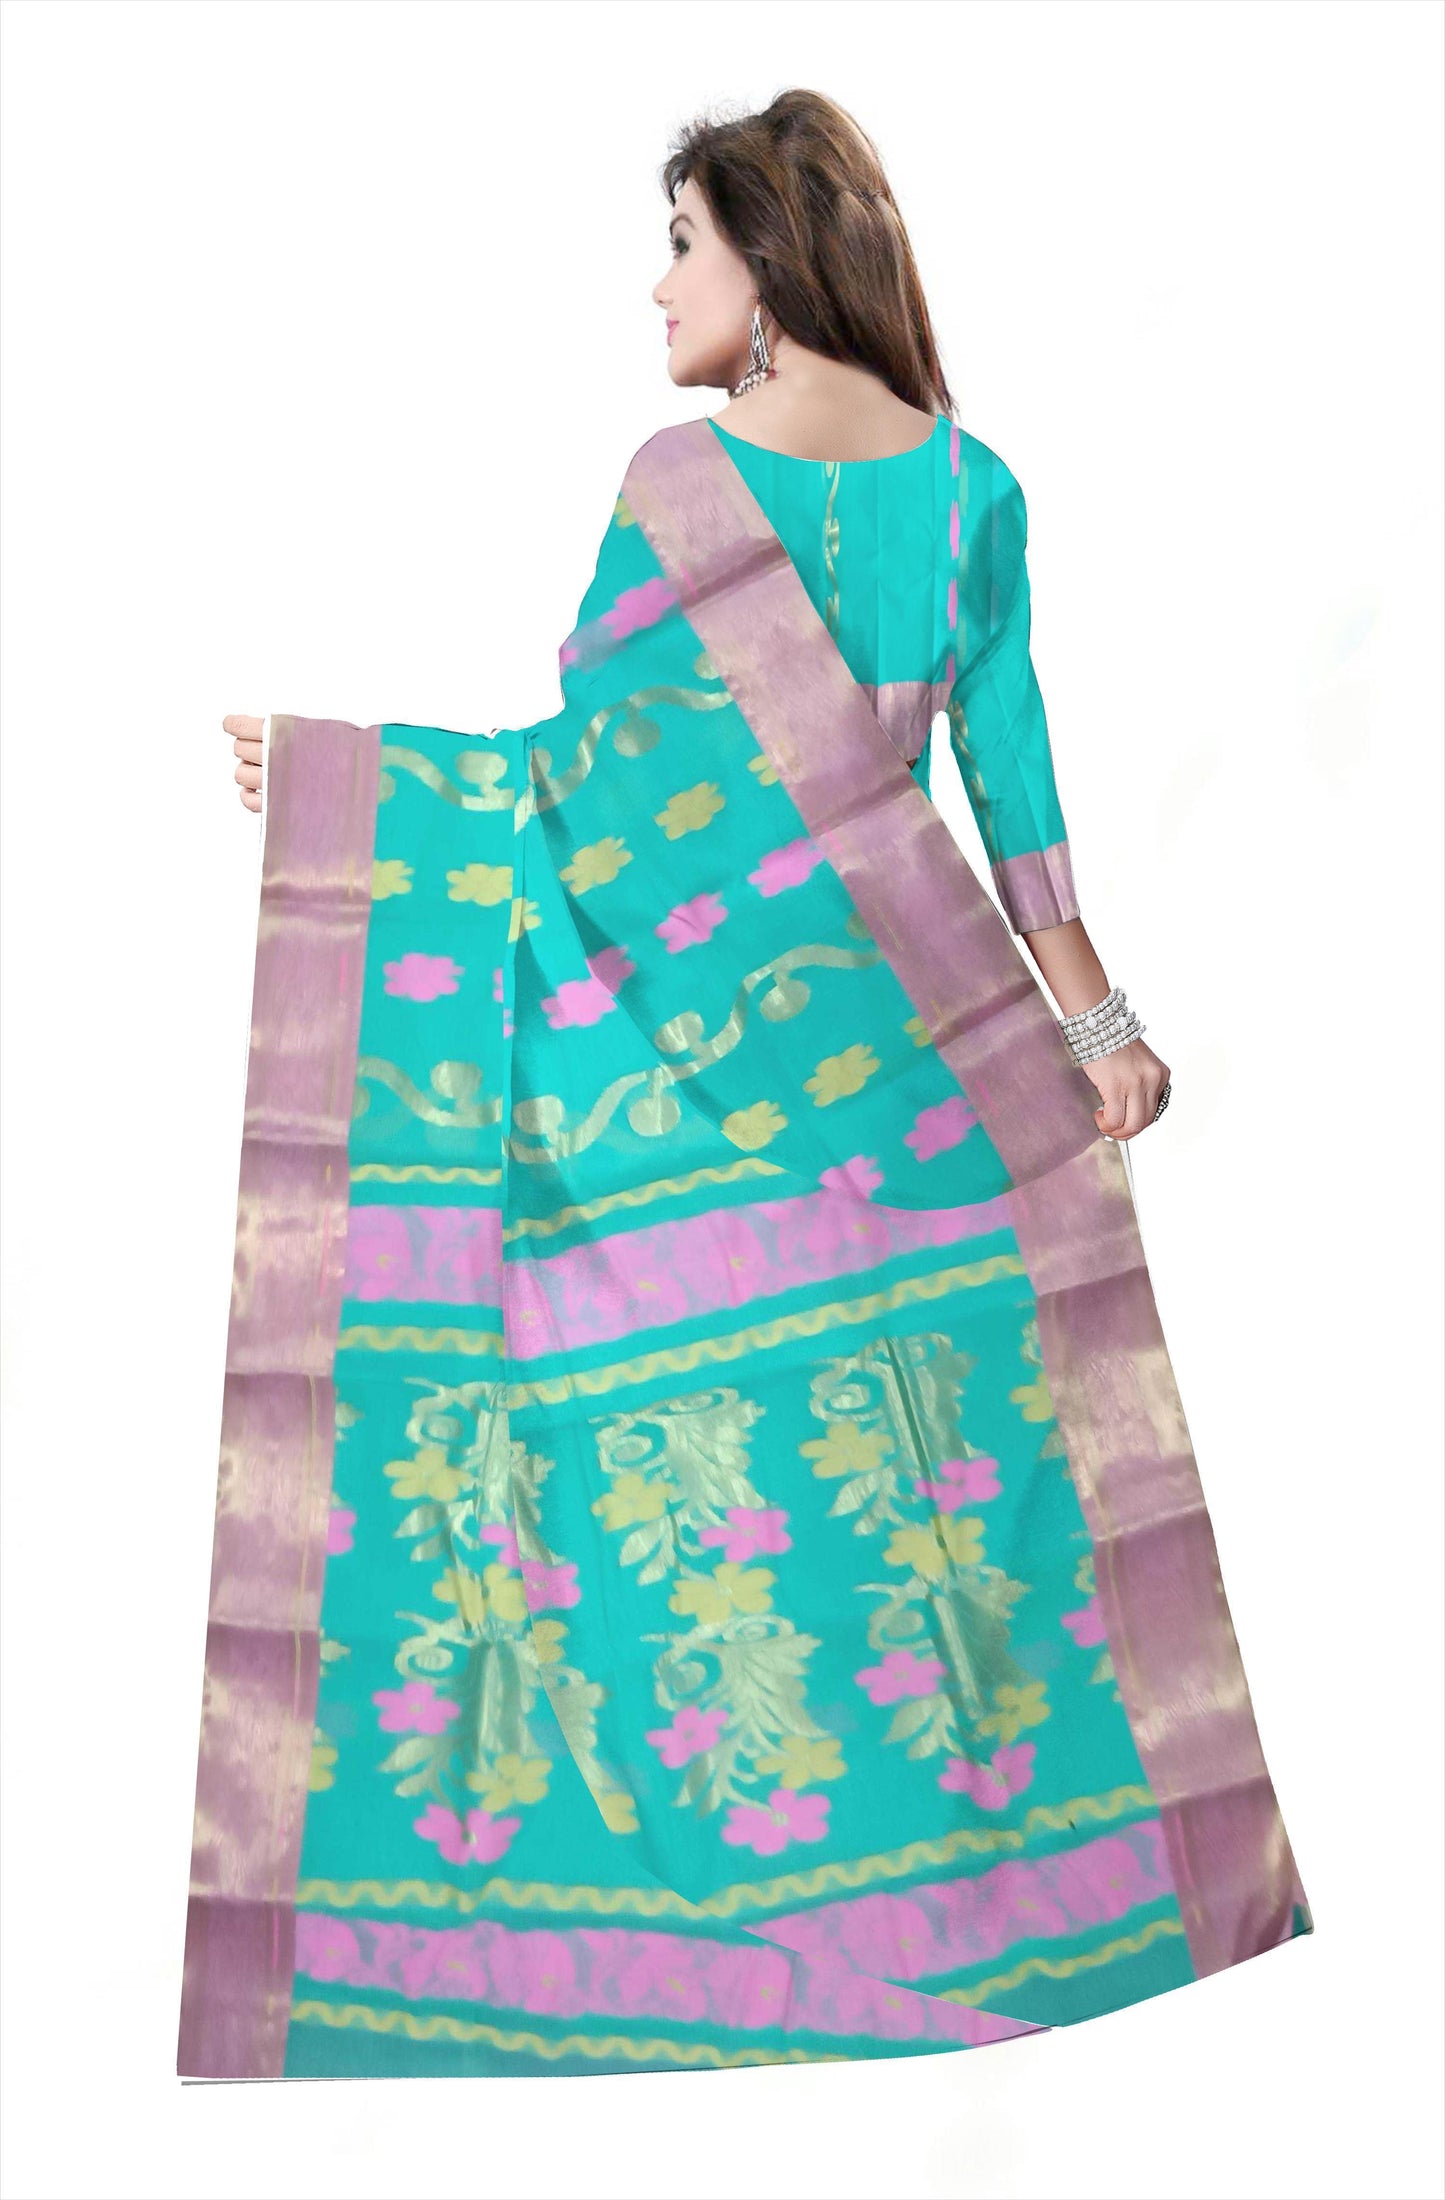 Pradip Fabrics Woven Tant Pure Cotton Saree (Green )